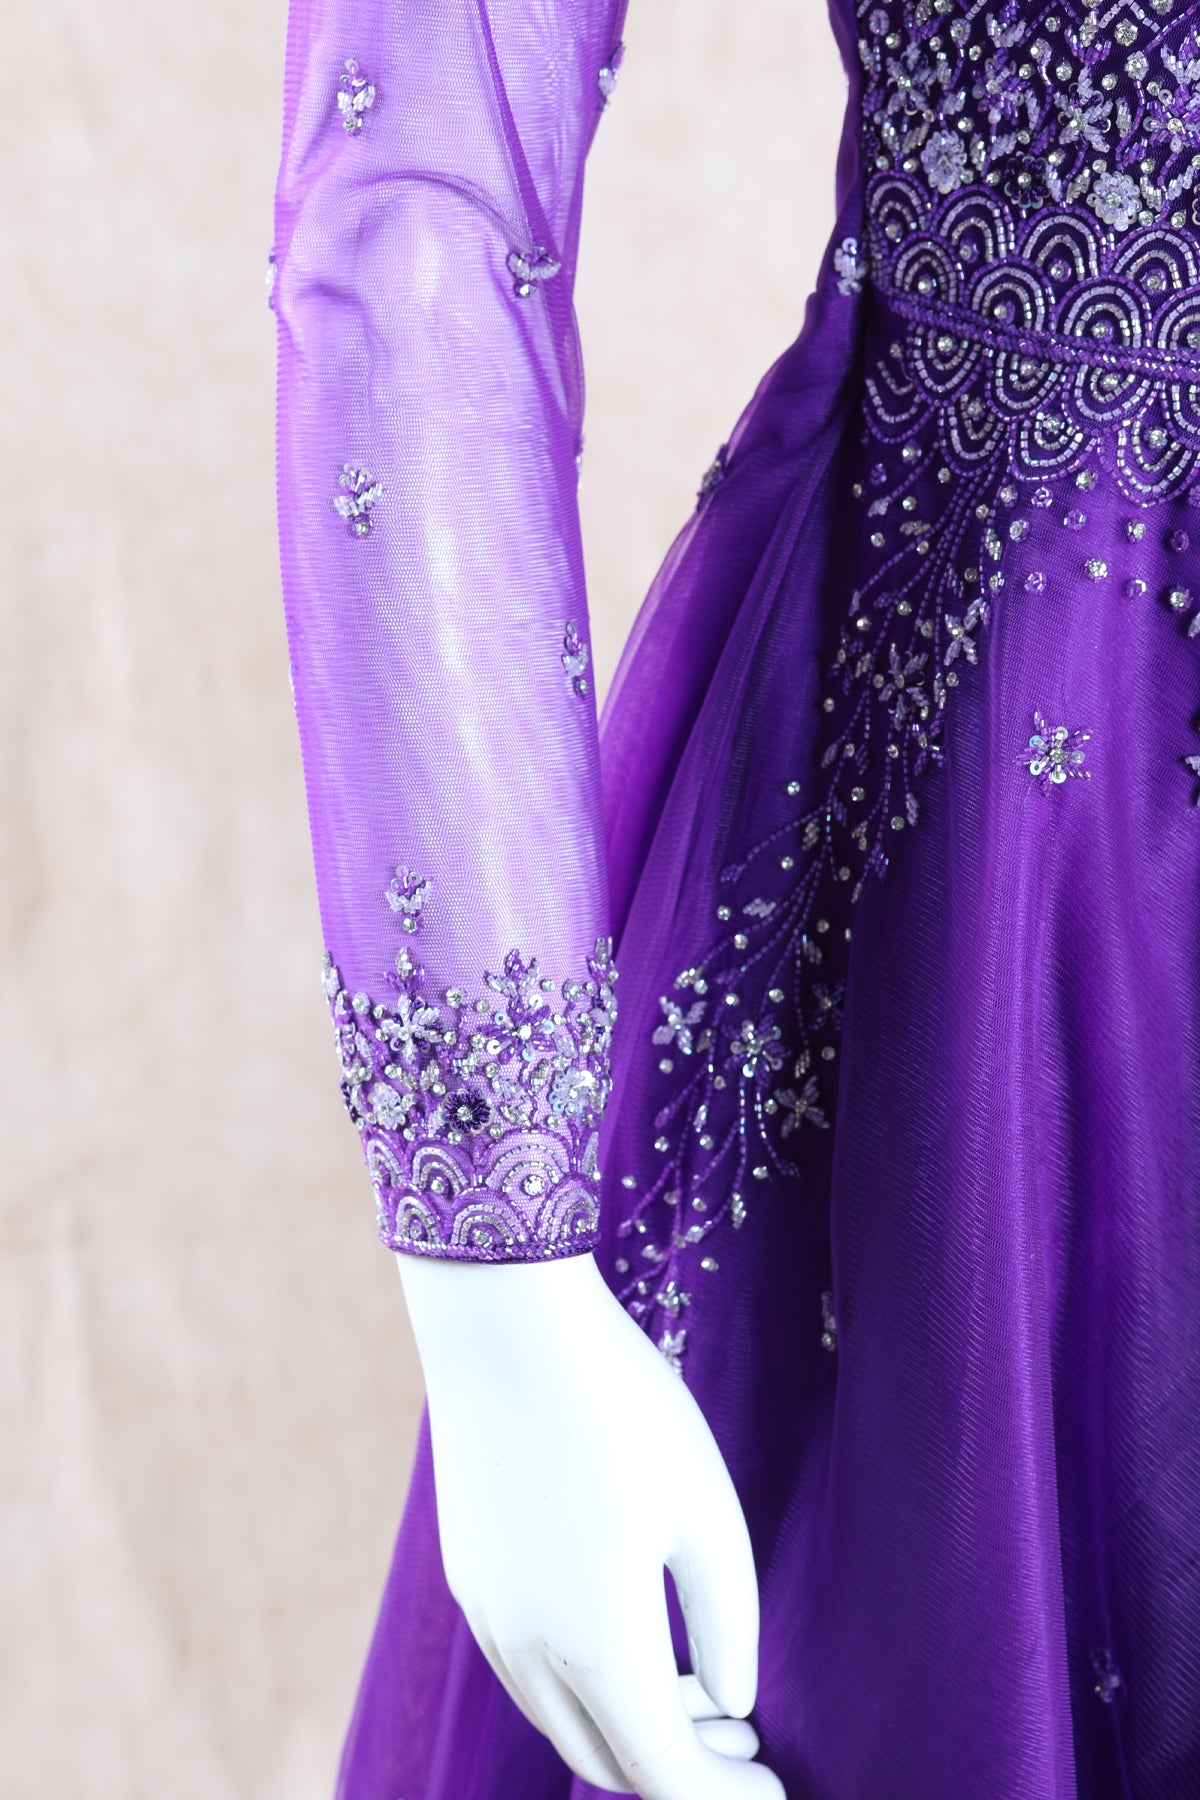 Violet Gown